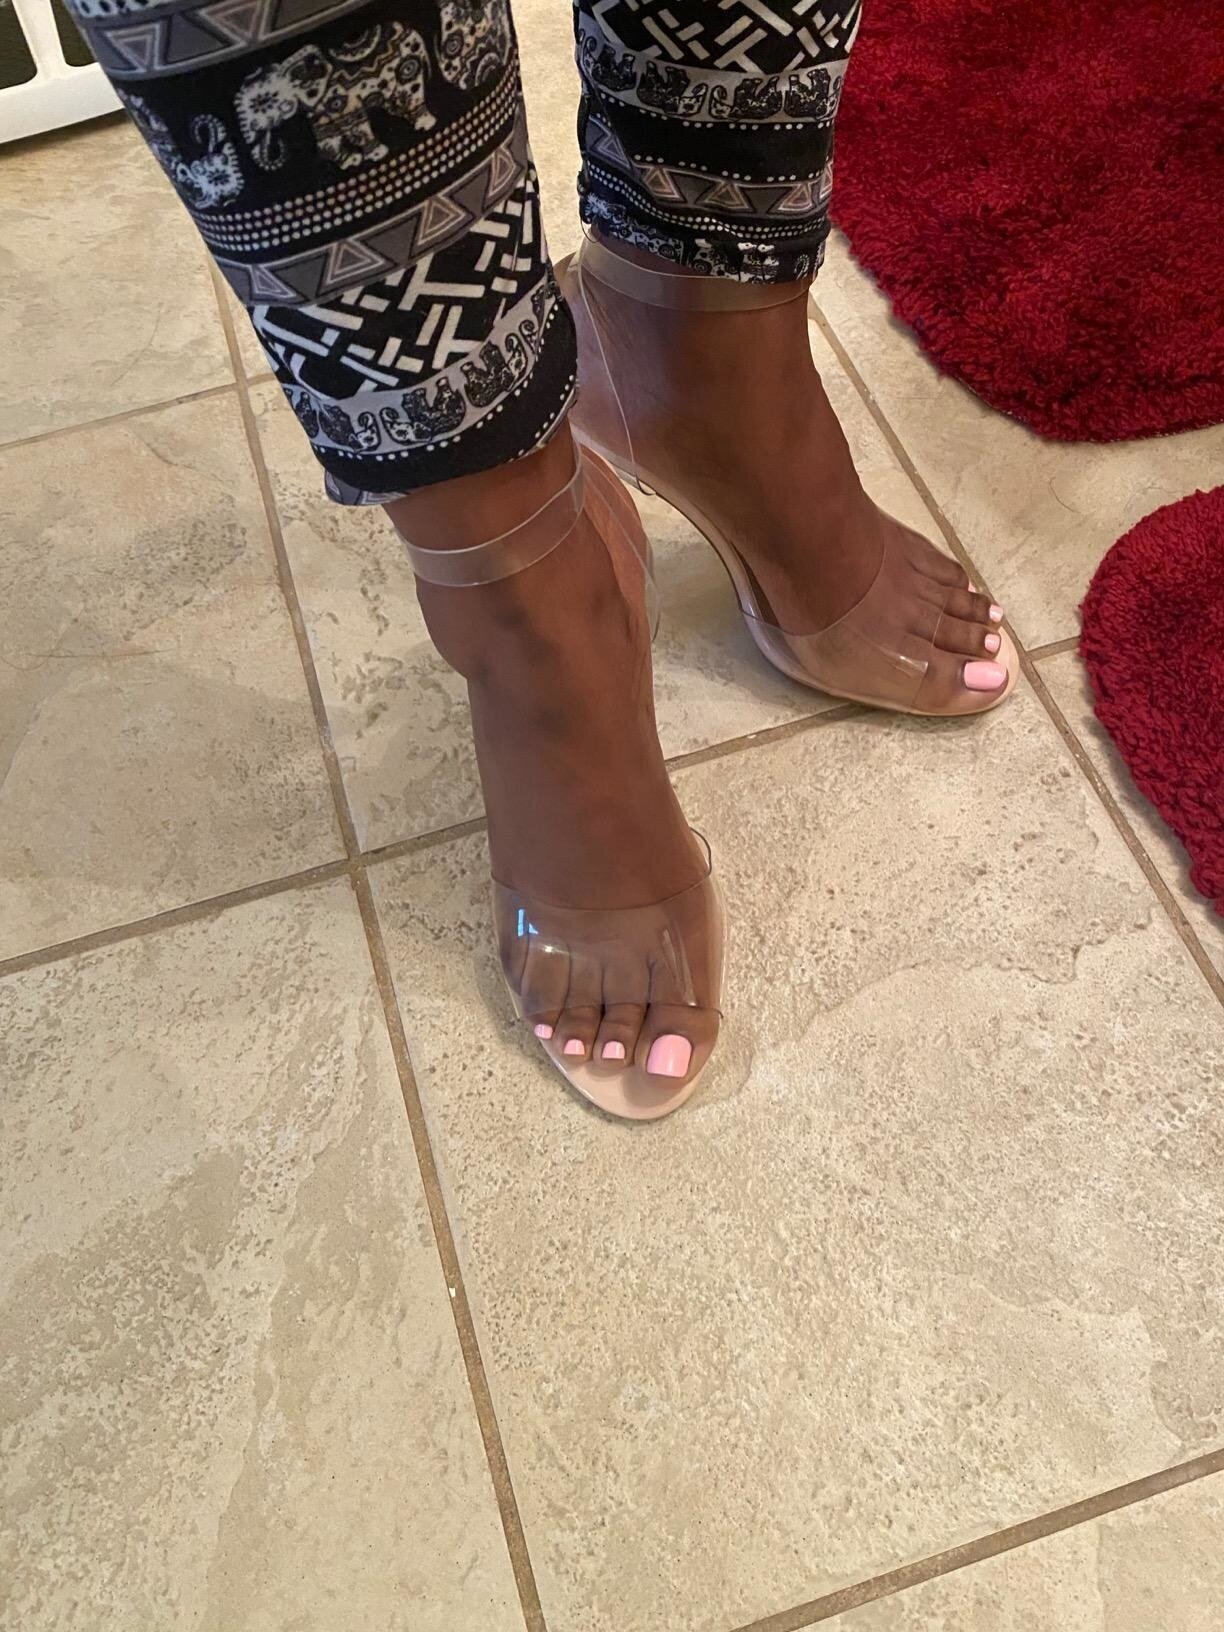 👠 FLORAL Lizette Women's Wide Width Ankle Strap Heeled Sandals 👠 | eBay